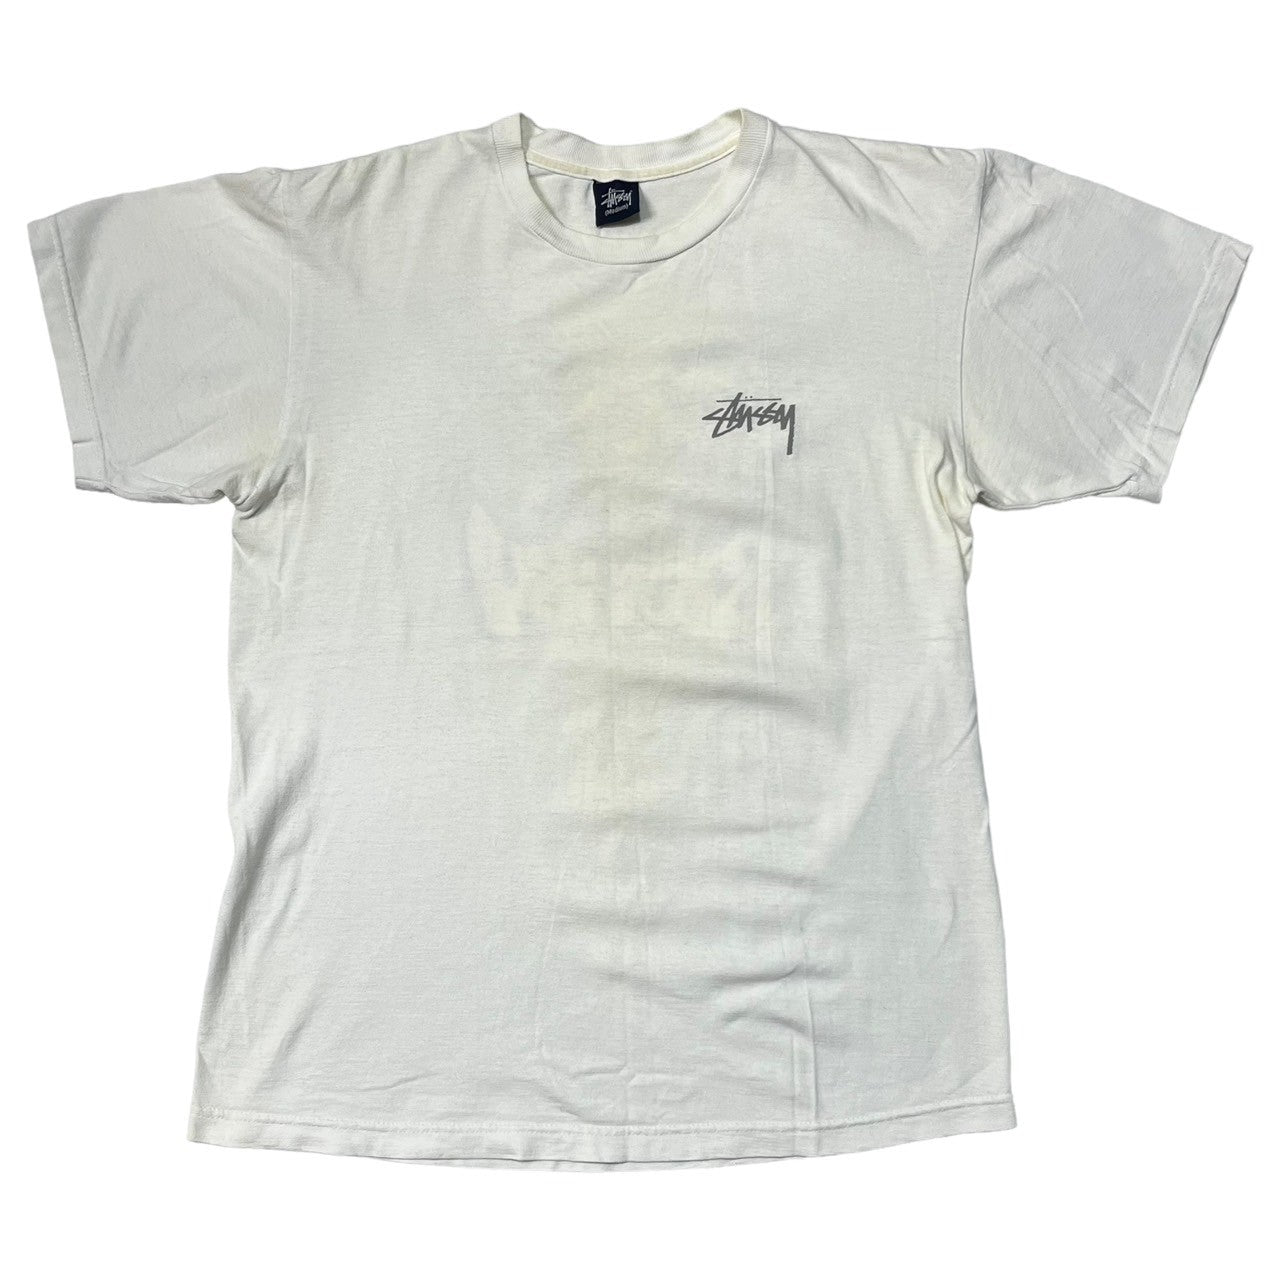 STUSSY(ステューシー) 90's~00's  elephant back print Tシャツ 象 バックプリント 紺タグ SIZE M ホワイト×グレー 90～00年代 OLD STUSSY